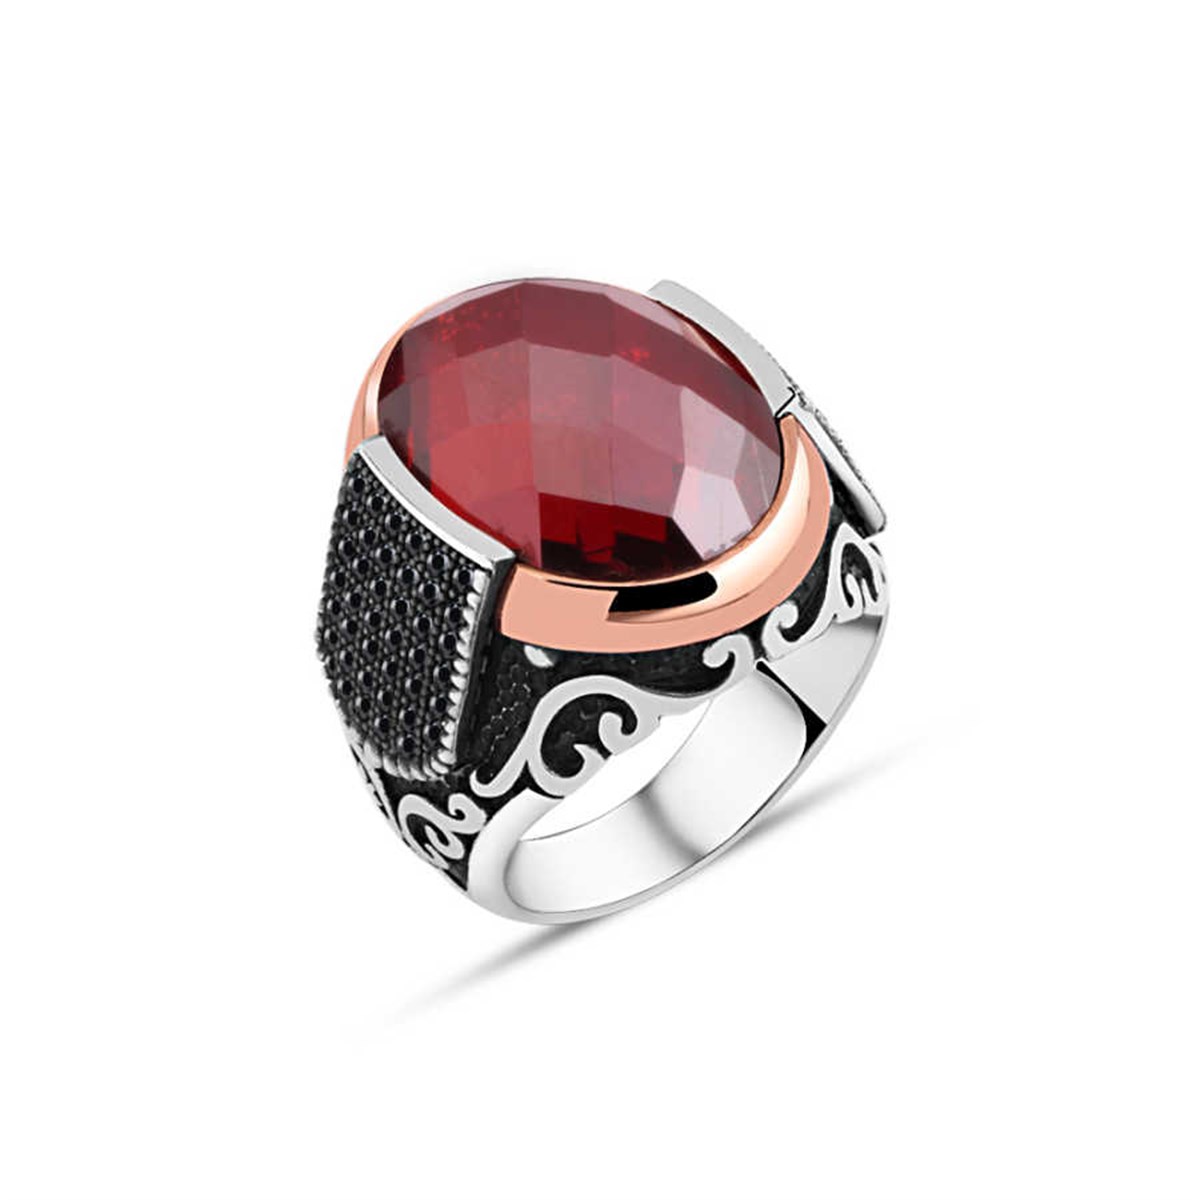 Cut Red Zircon Stone Sterling Silver Men's Ring